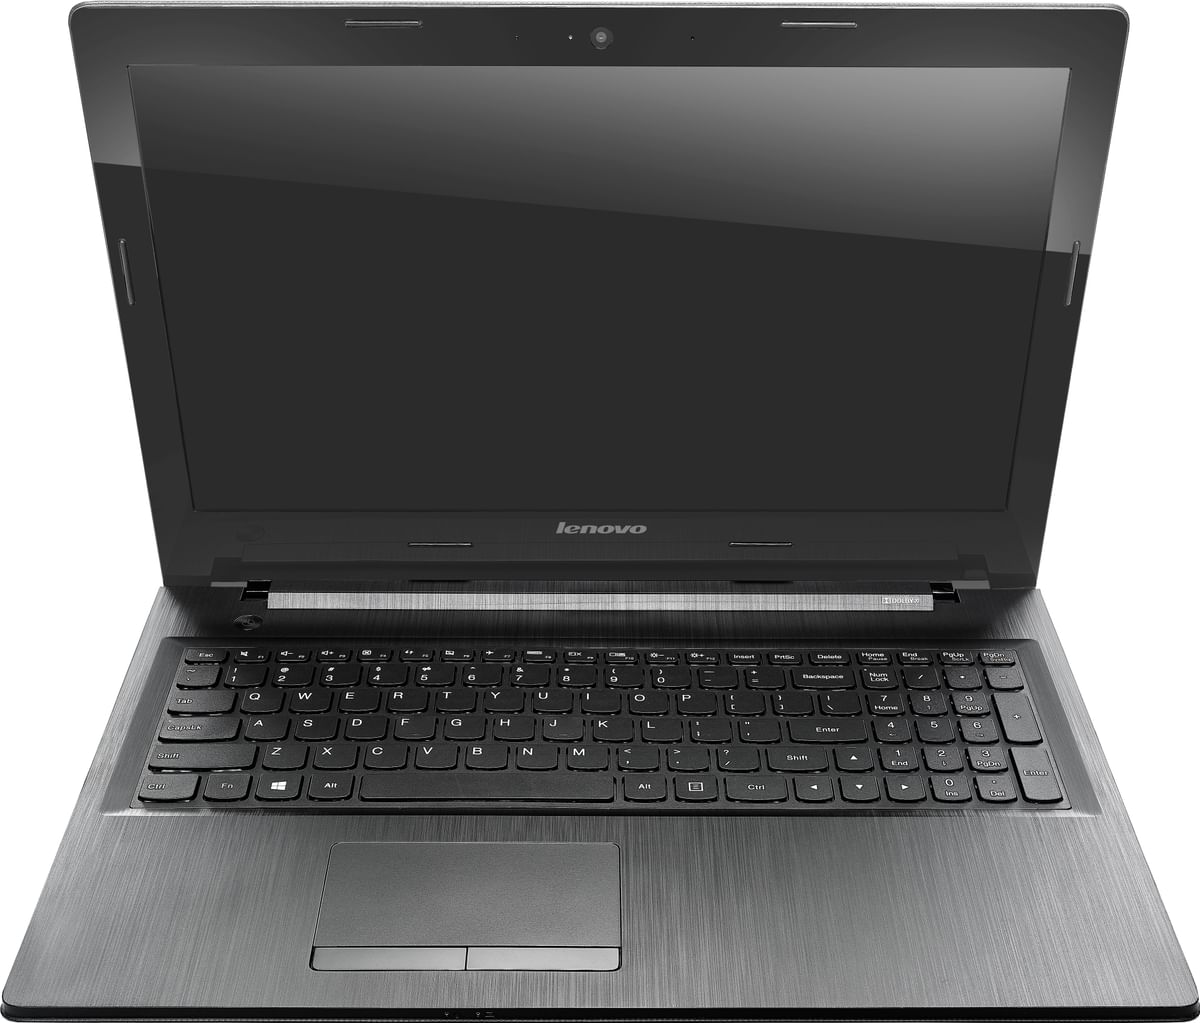 Lenovo G50-70 59-417092 Notebook (4th Gen Ci3/ 2GB/ 500GB/ Win8.1) Best